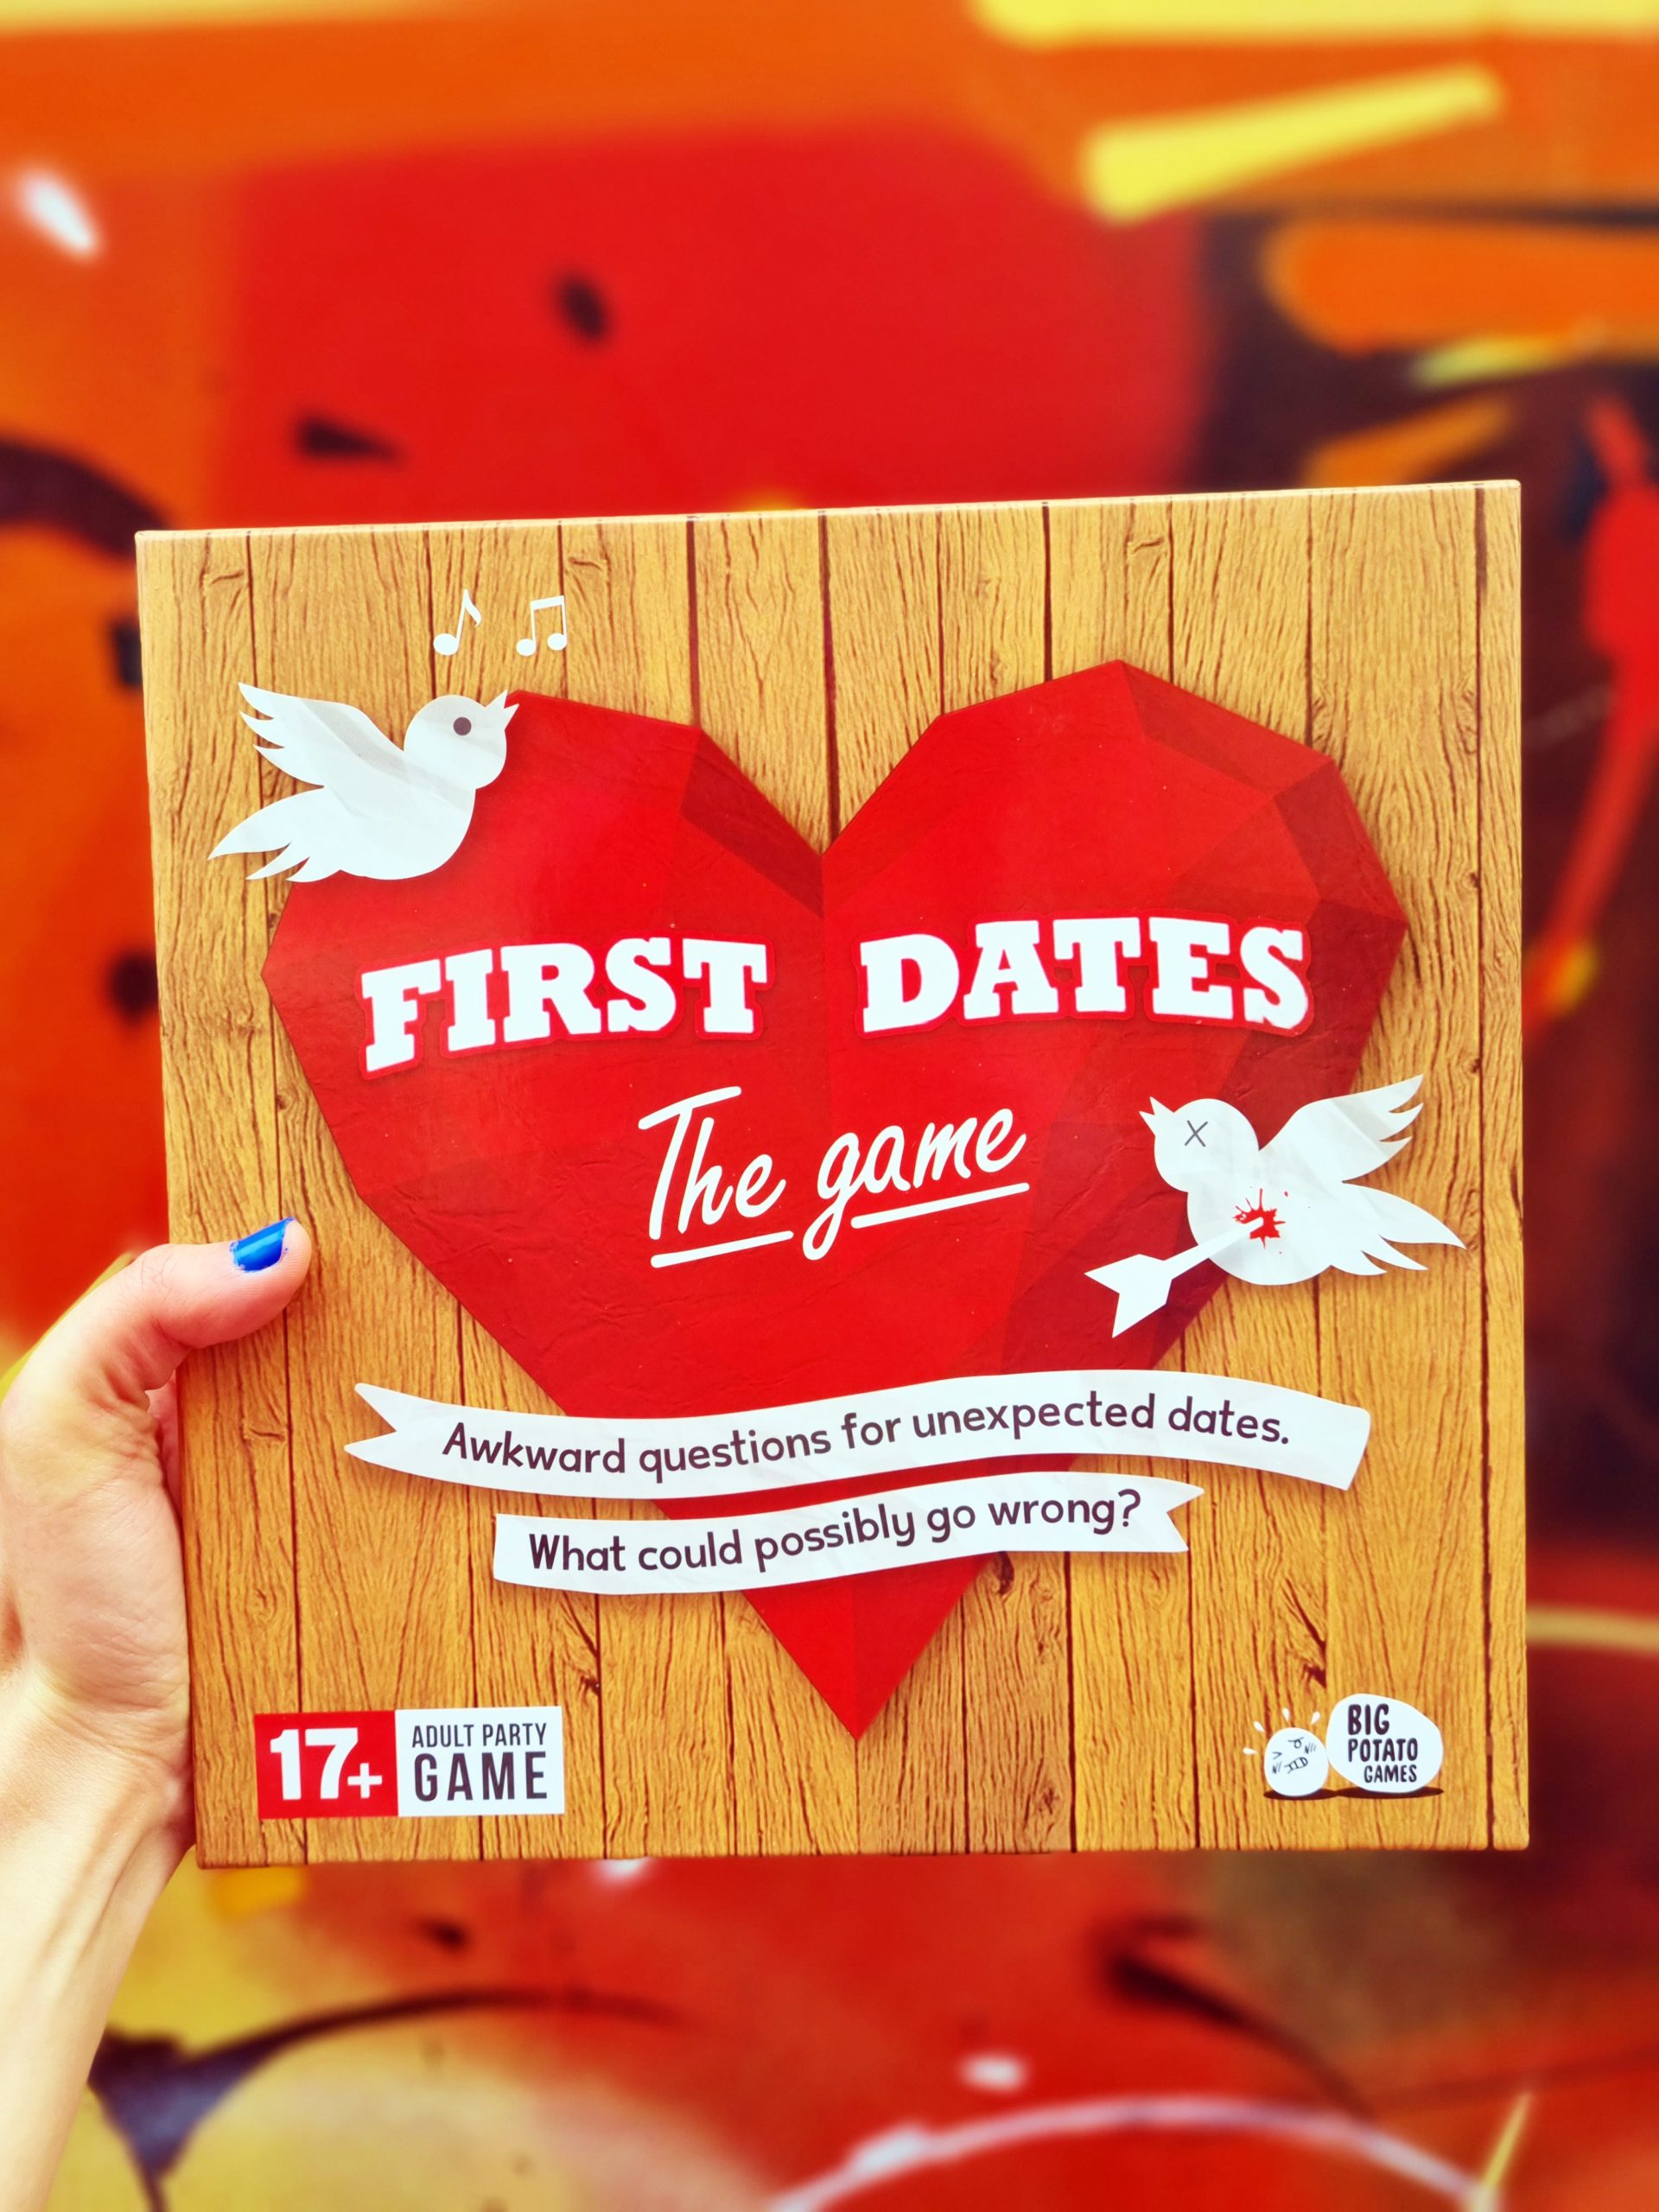 <img src="first.jpg" alt="first dates quirky valentine's day game"/> 